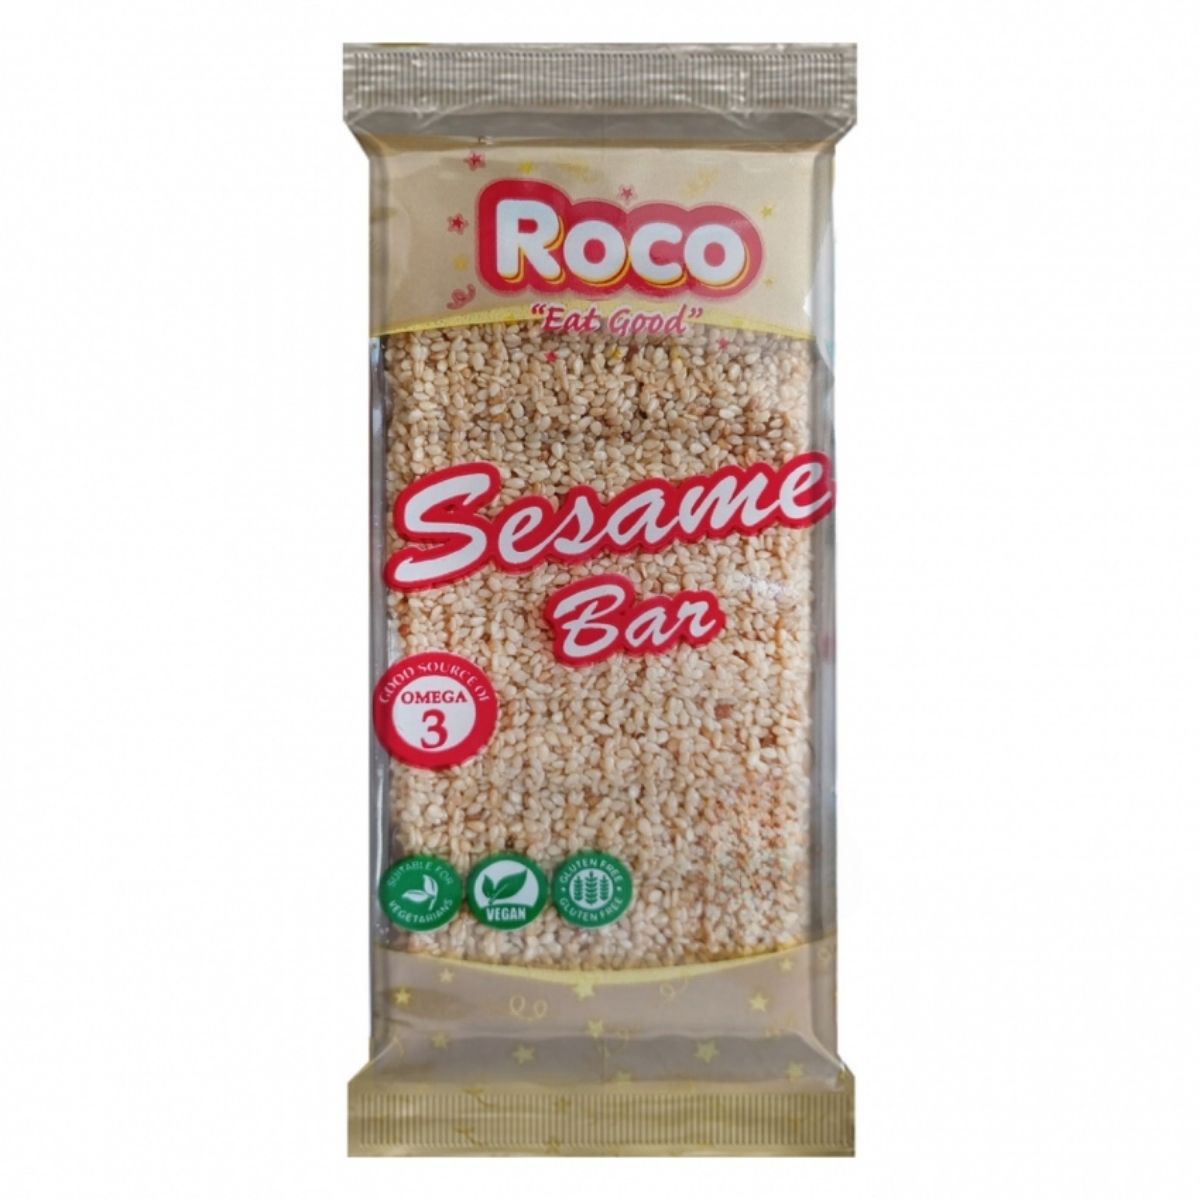 Roco - Sesame Bar (Gluten Free) - 50g - Continental Food Store